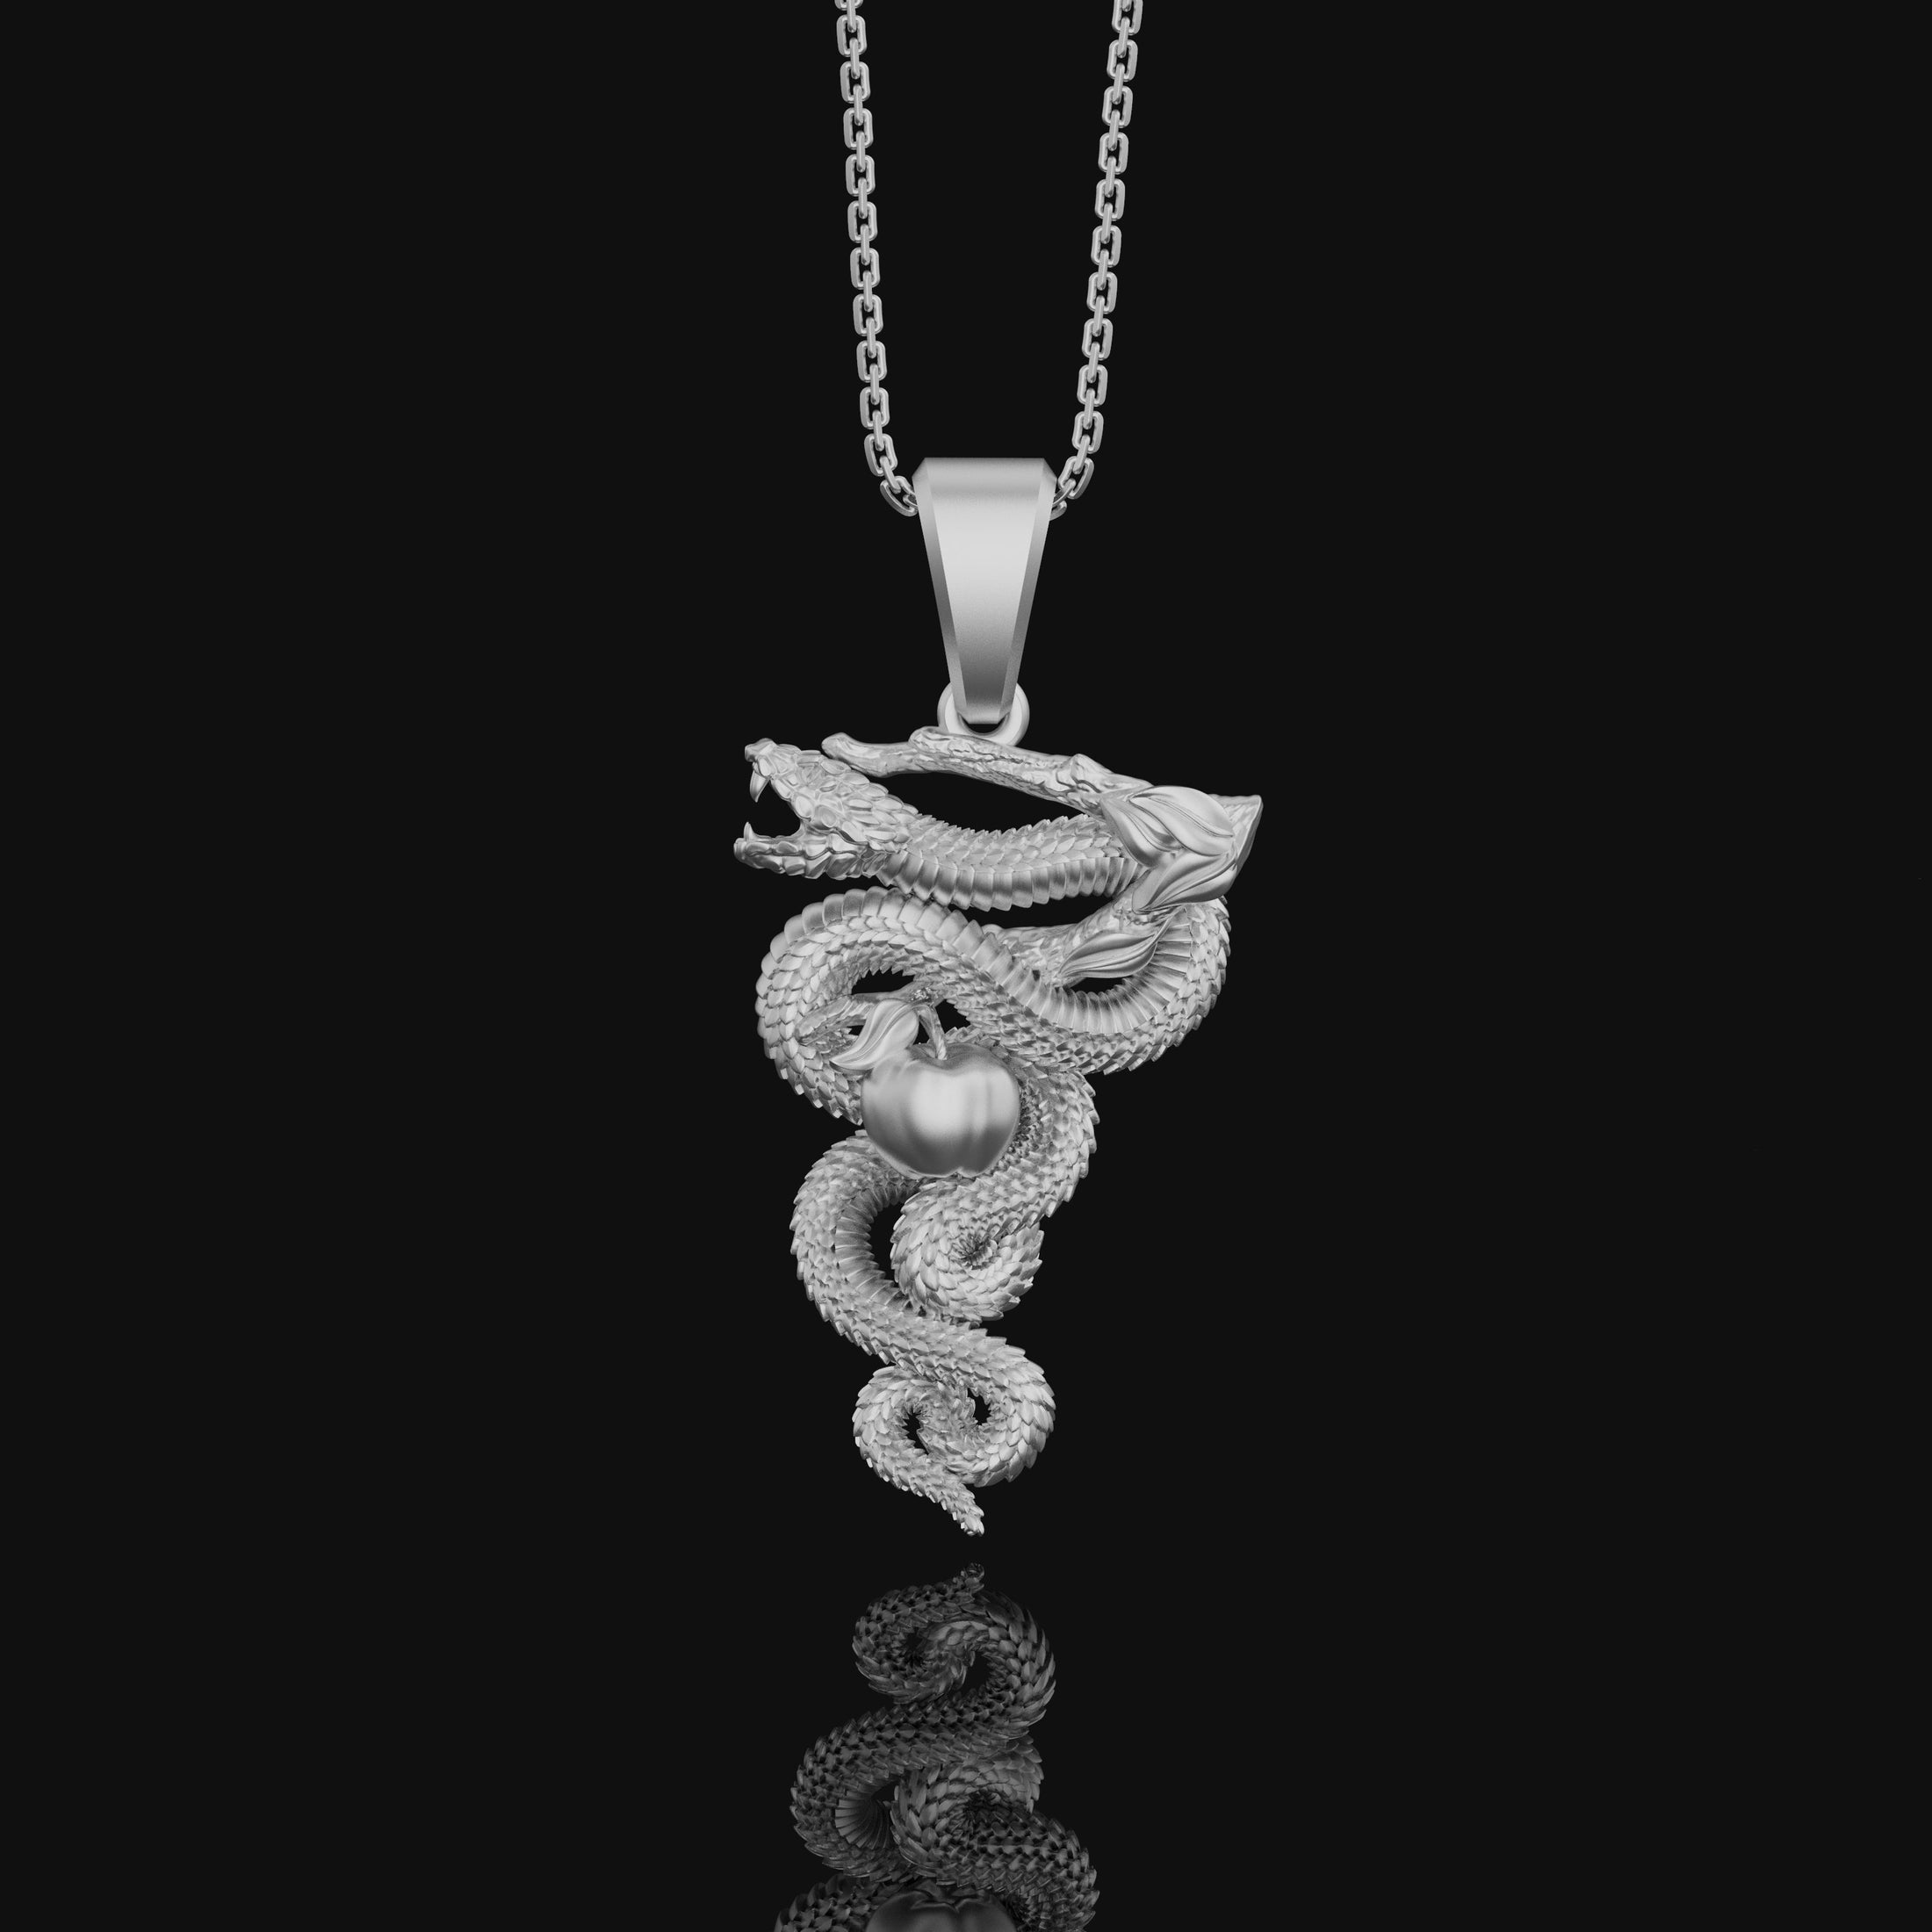 Eden Serpent Necklace - Adam and Eve Snake Pendant, Biblical Forbidden Fruit Jewelry, Spiritual Gift